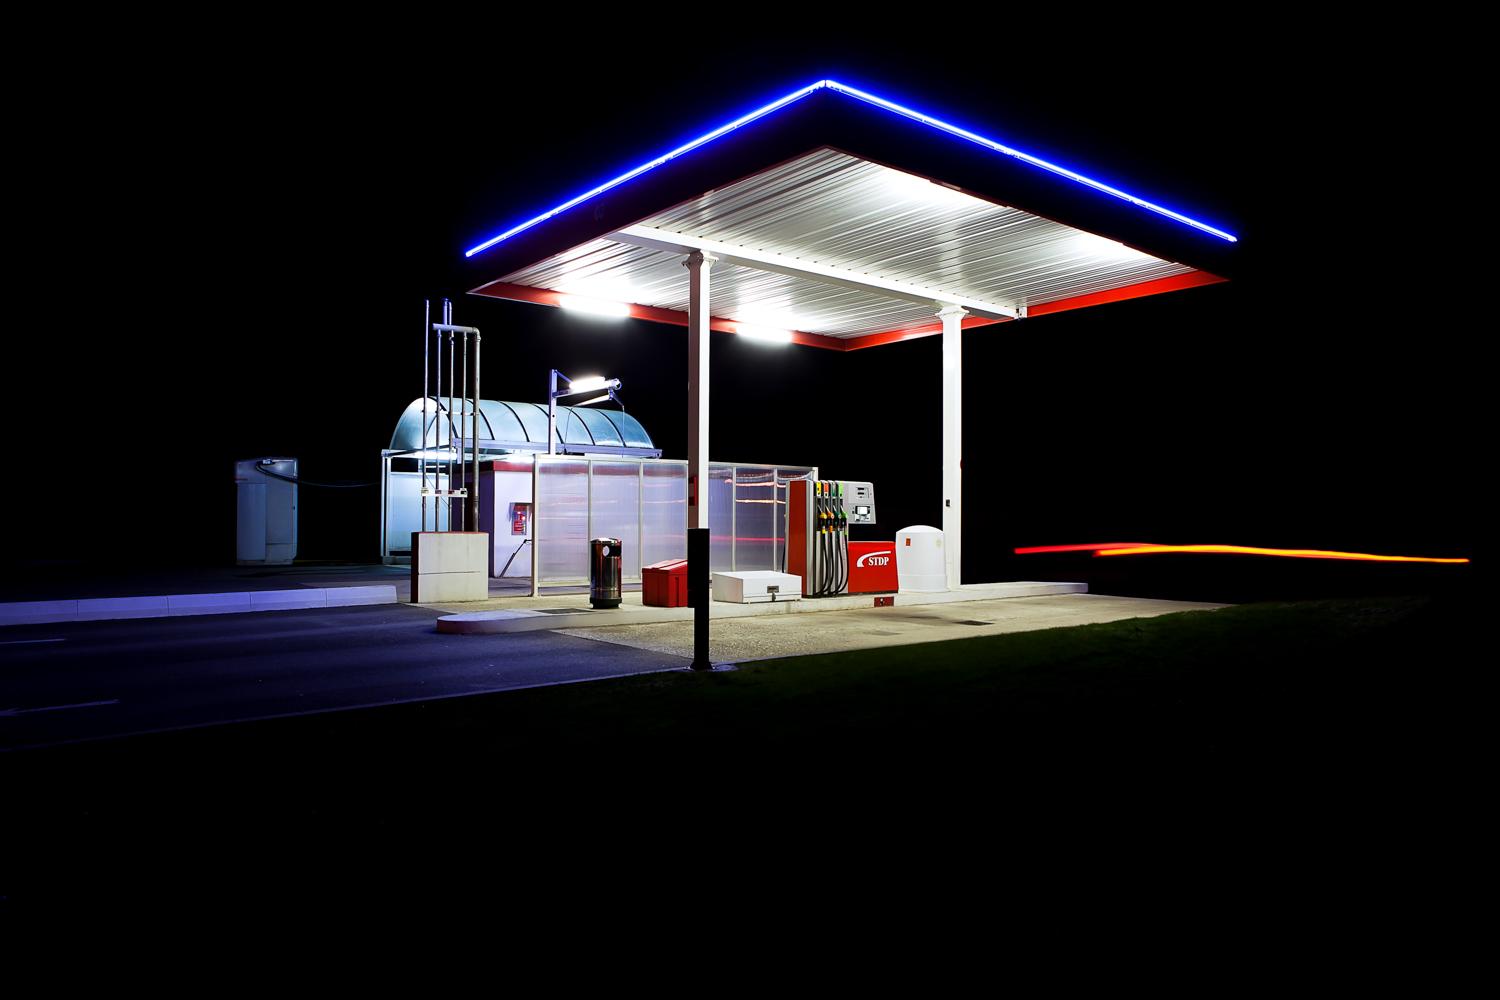 Fresh Start by Xavier Dumoulin - Contemporary night photography, dark neon color